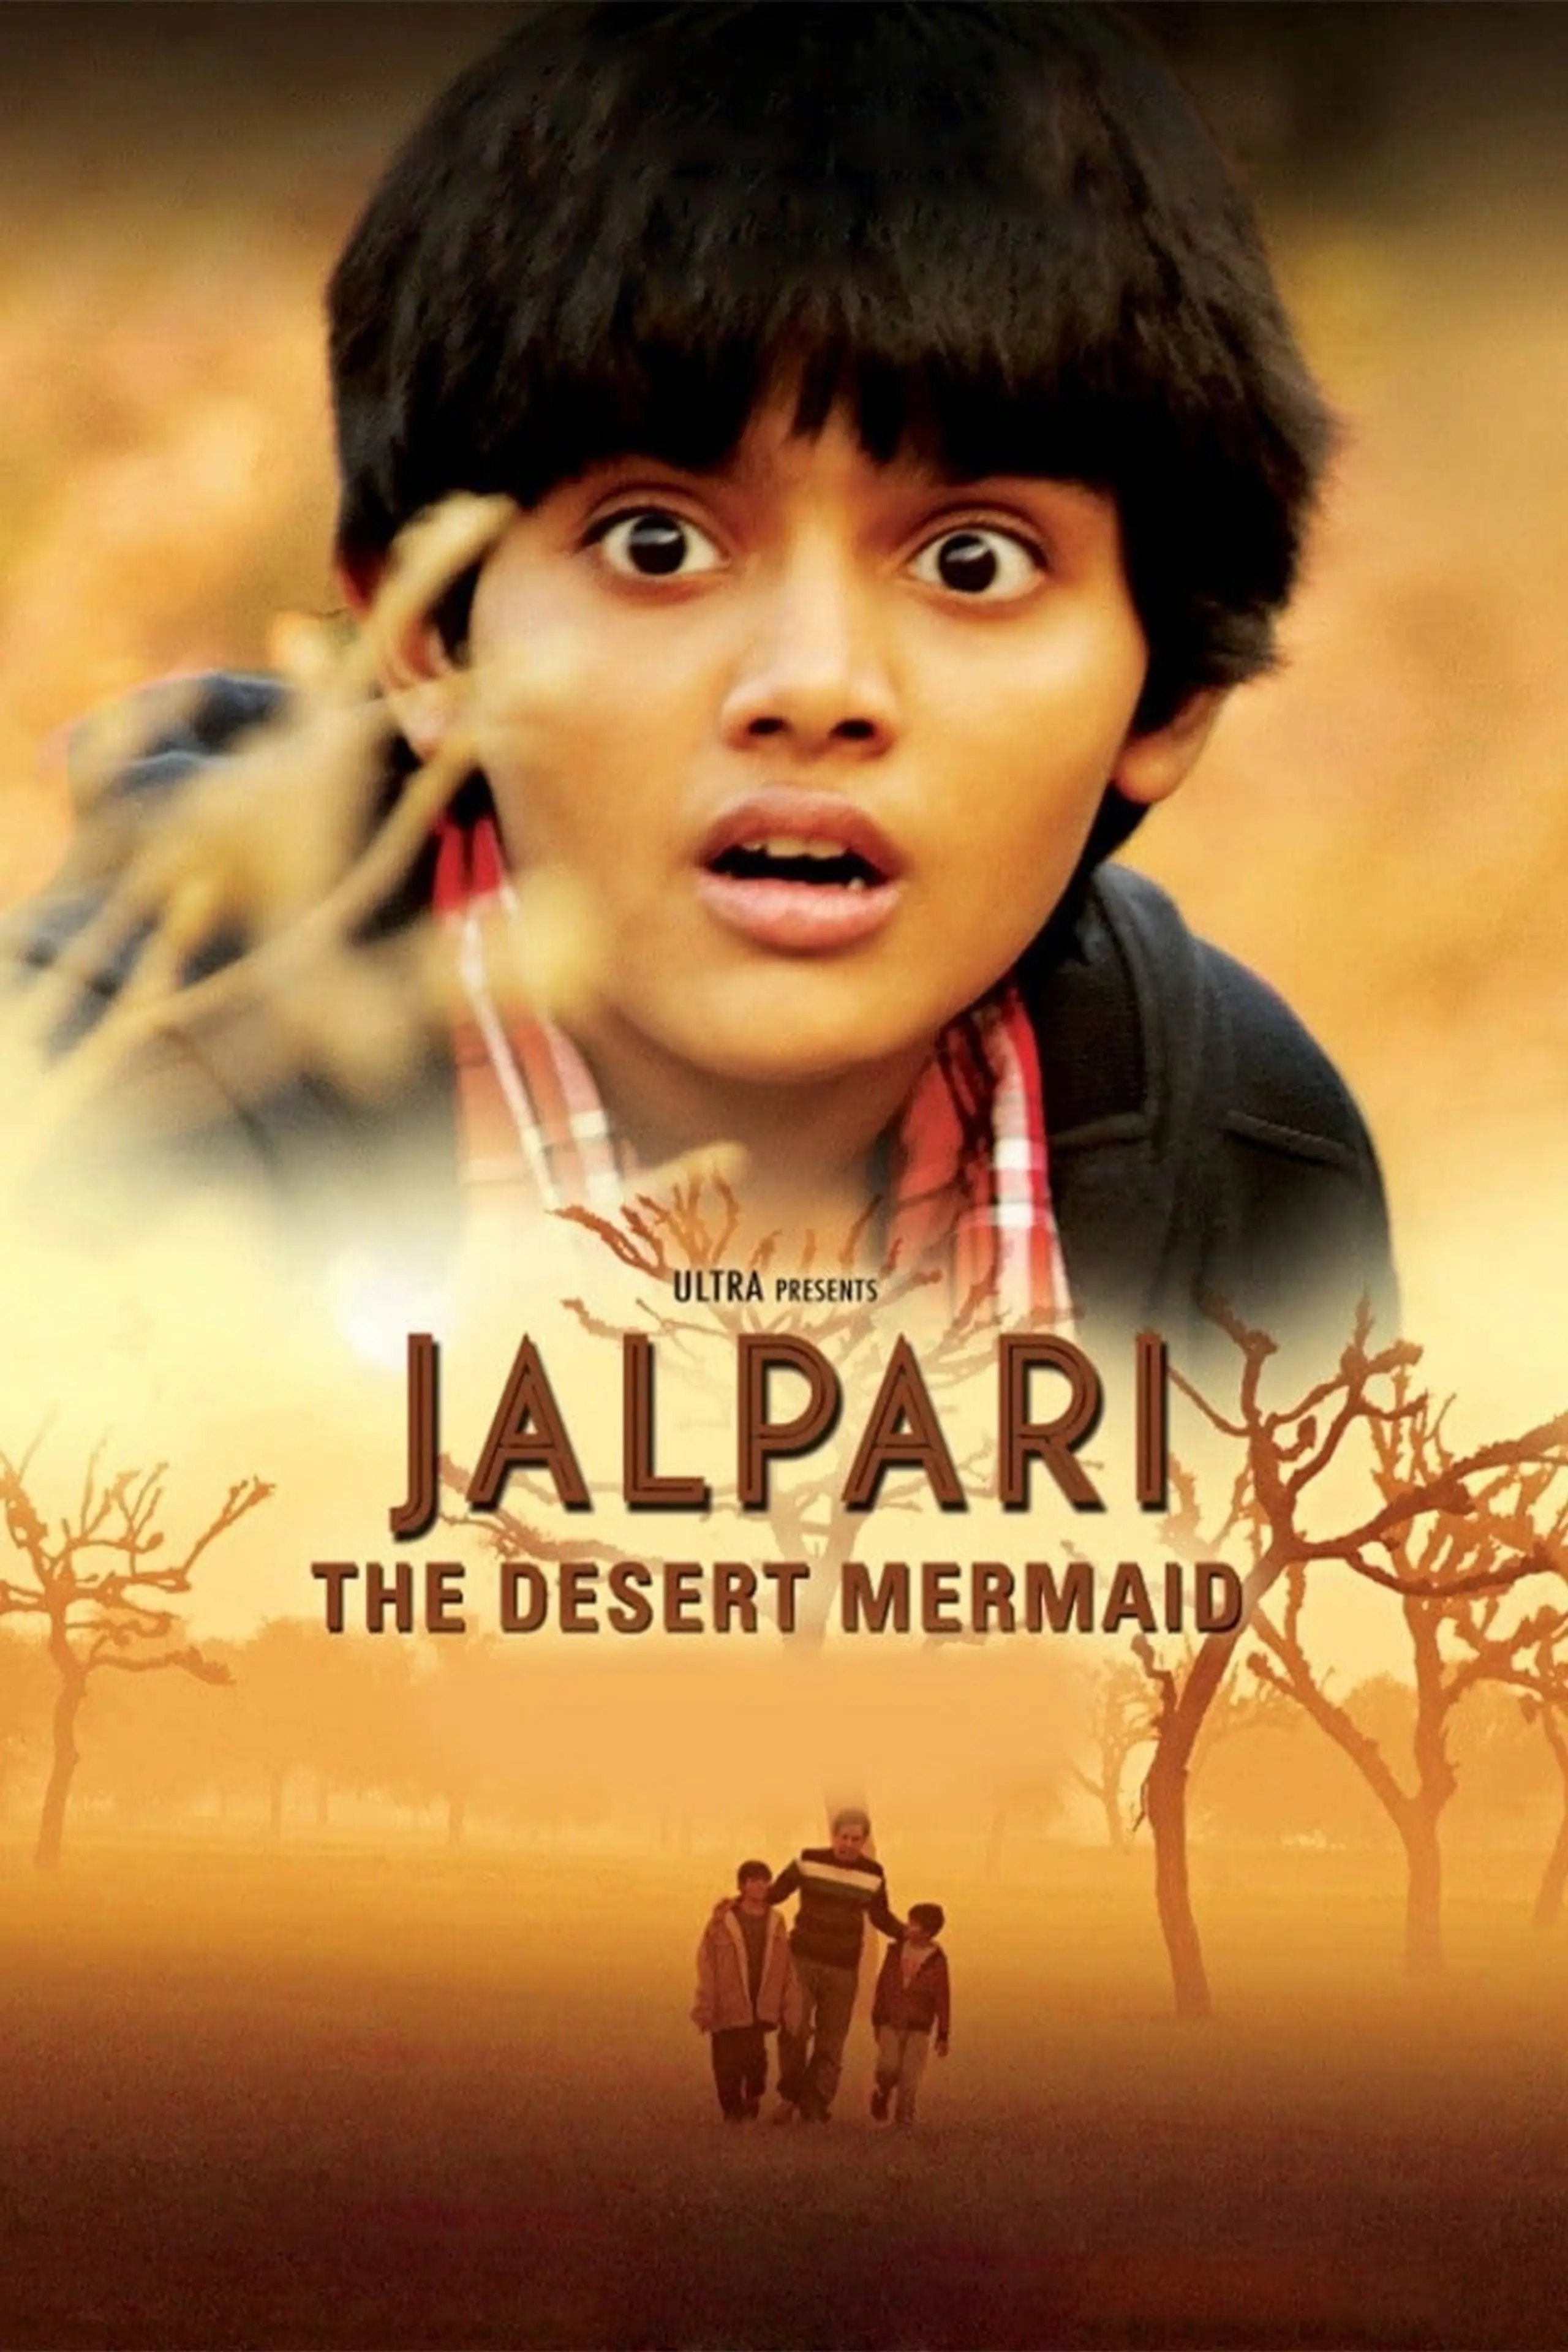 Jalpari